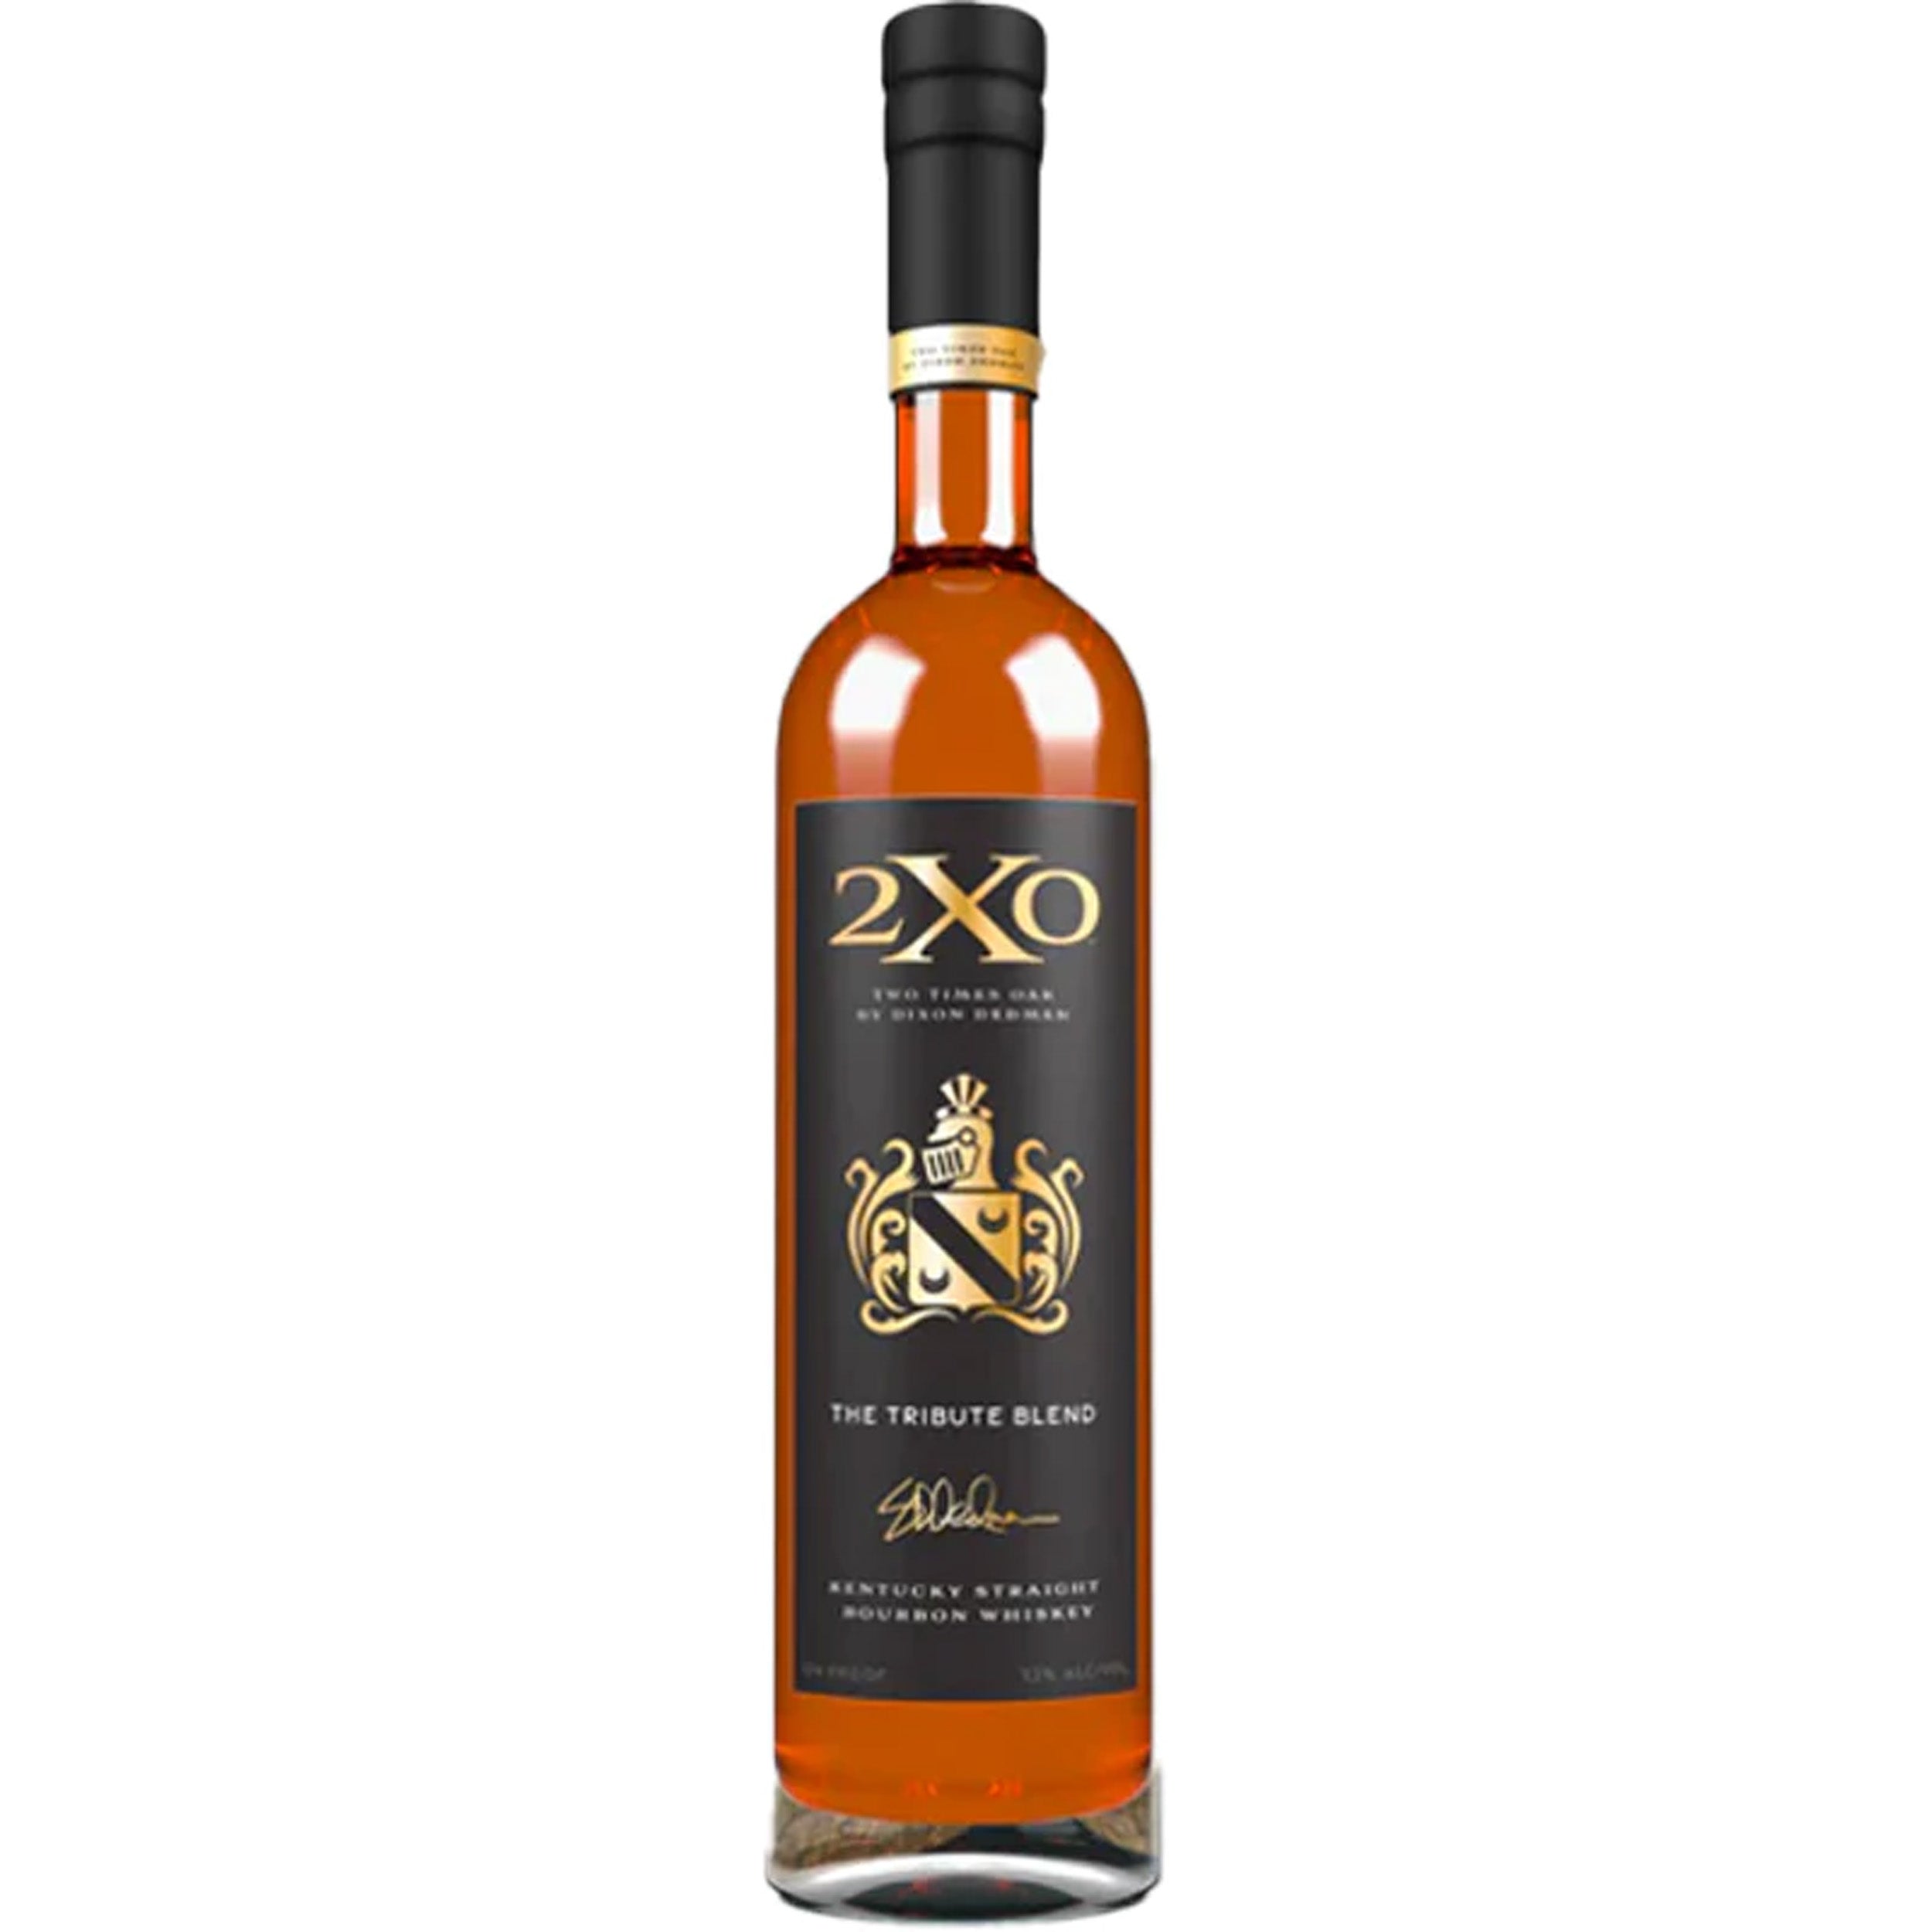 2XO 'The Tribute Blend' Bourbon Whiskey